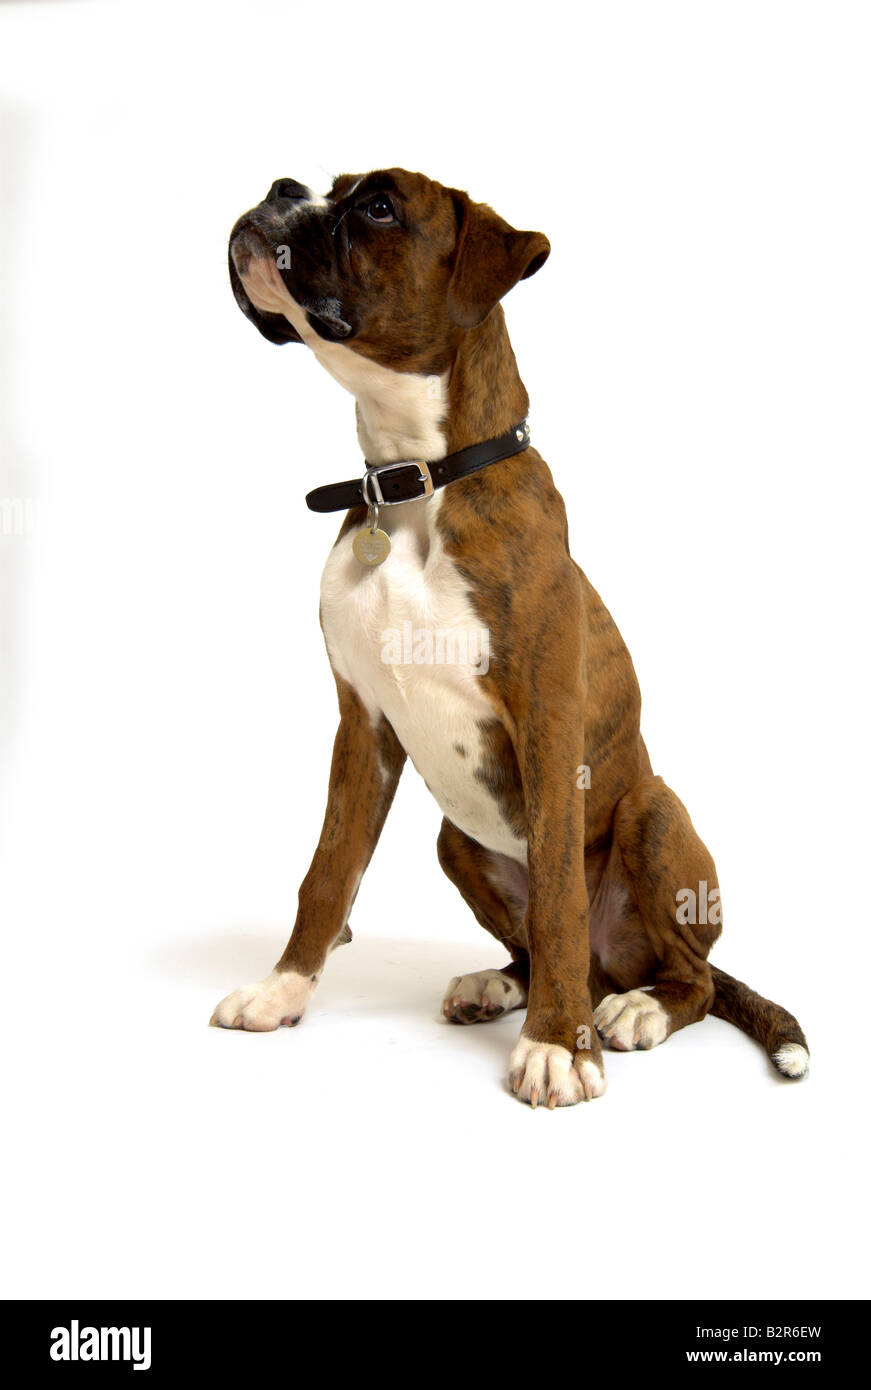 Perro Boxer cachorro de 6 meses Fotografía de stock - Alamy